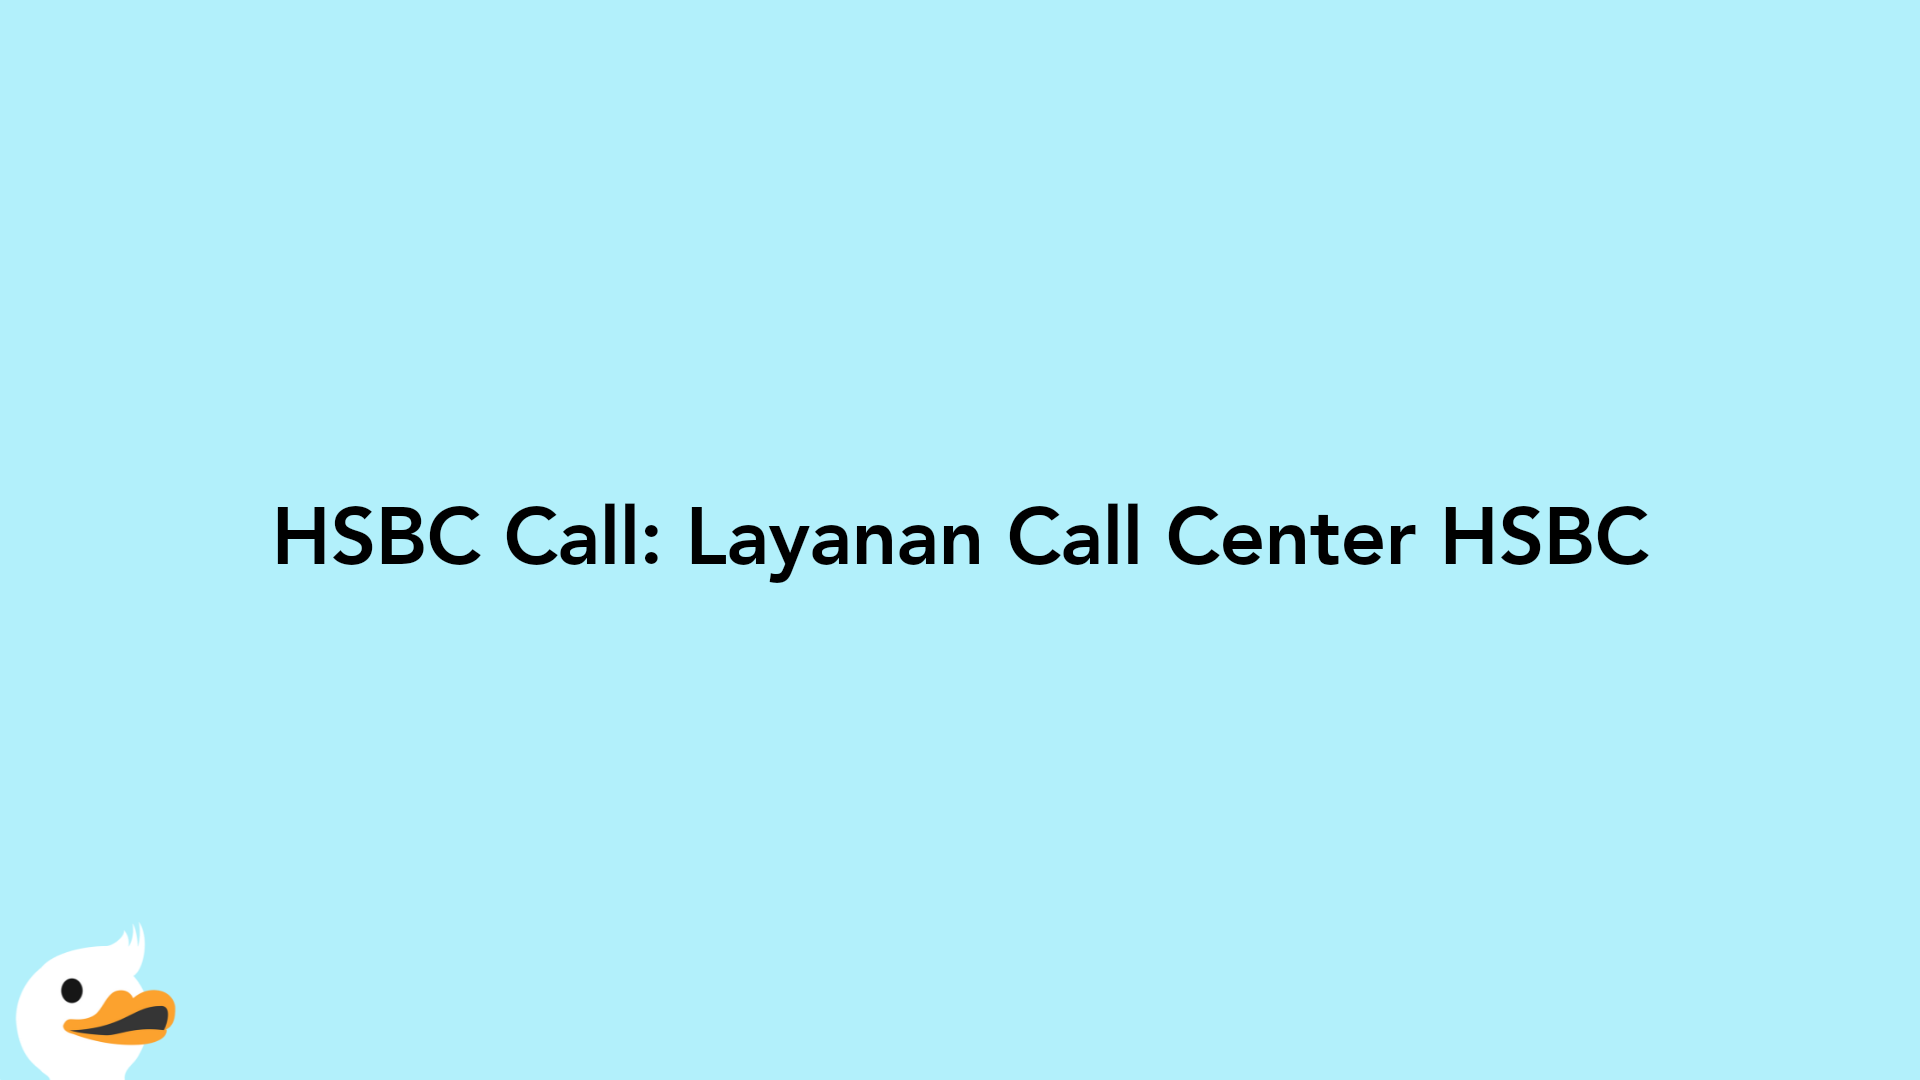 HSBC Call: Layanan Call Center HSBC